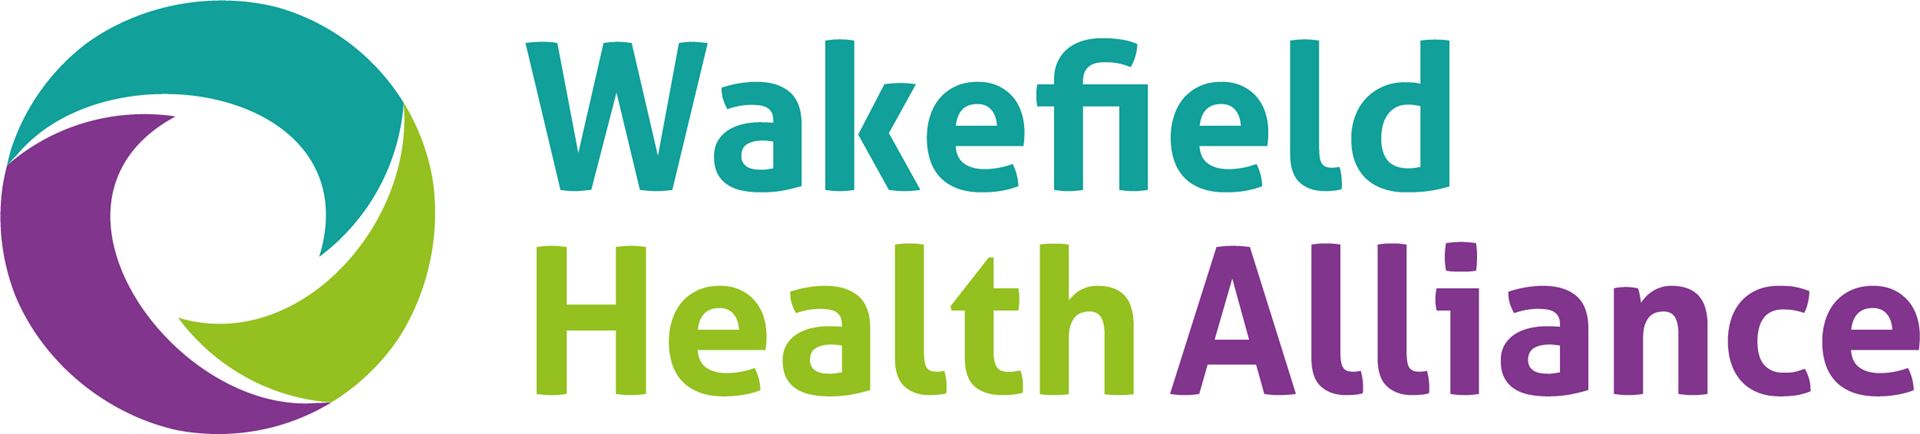 Wakefield Health Alliance Logo